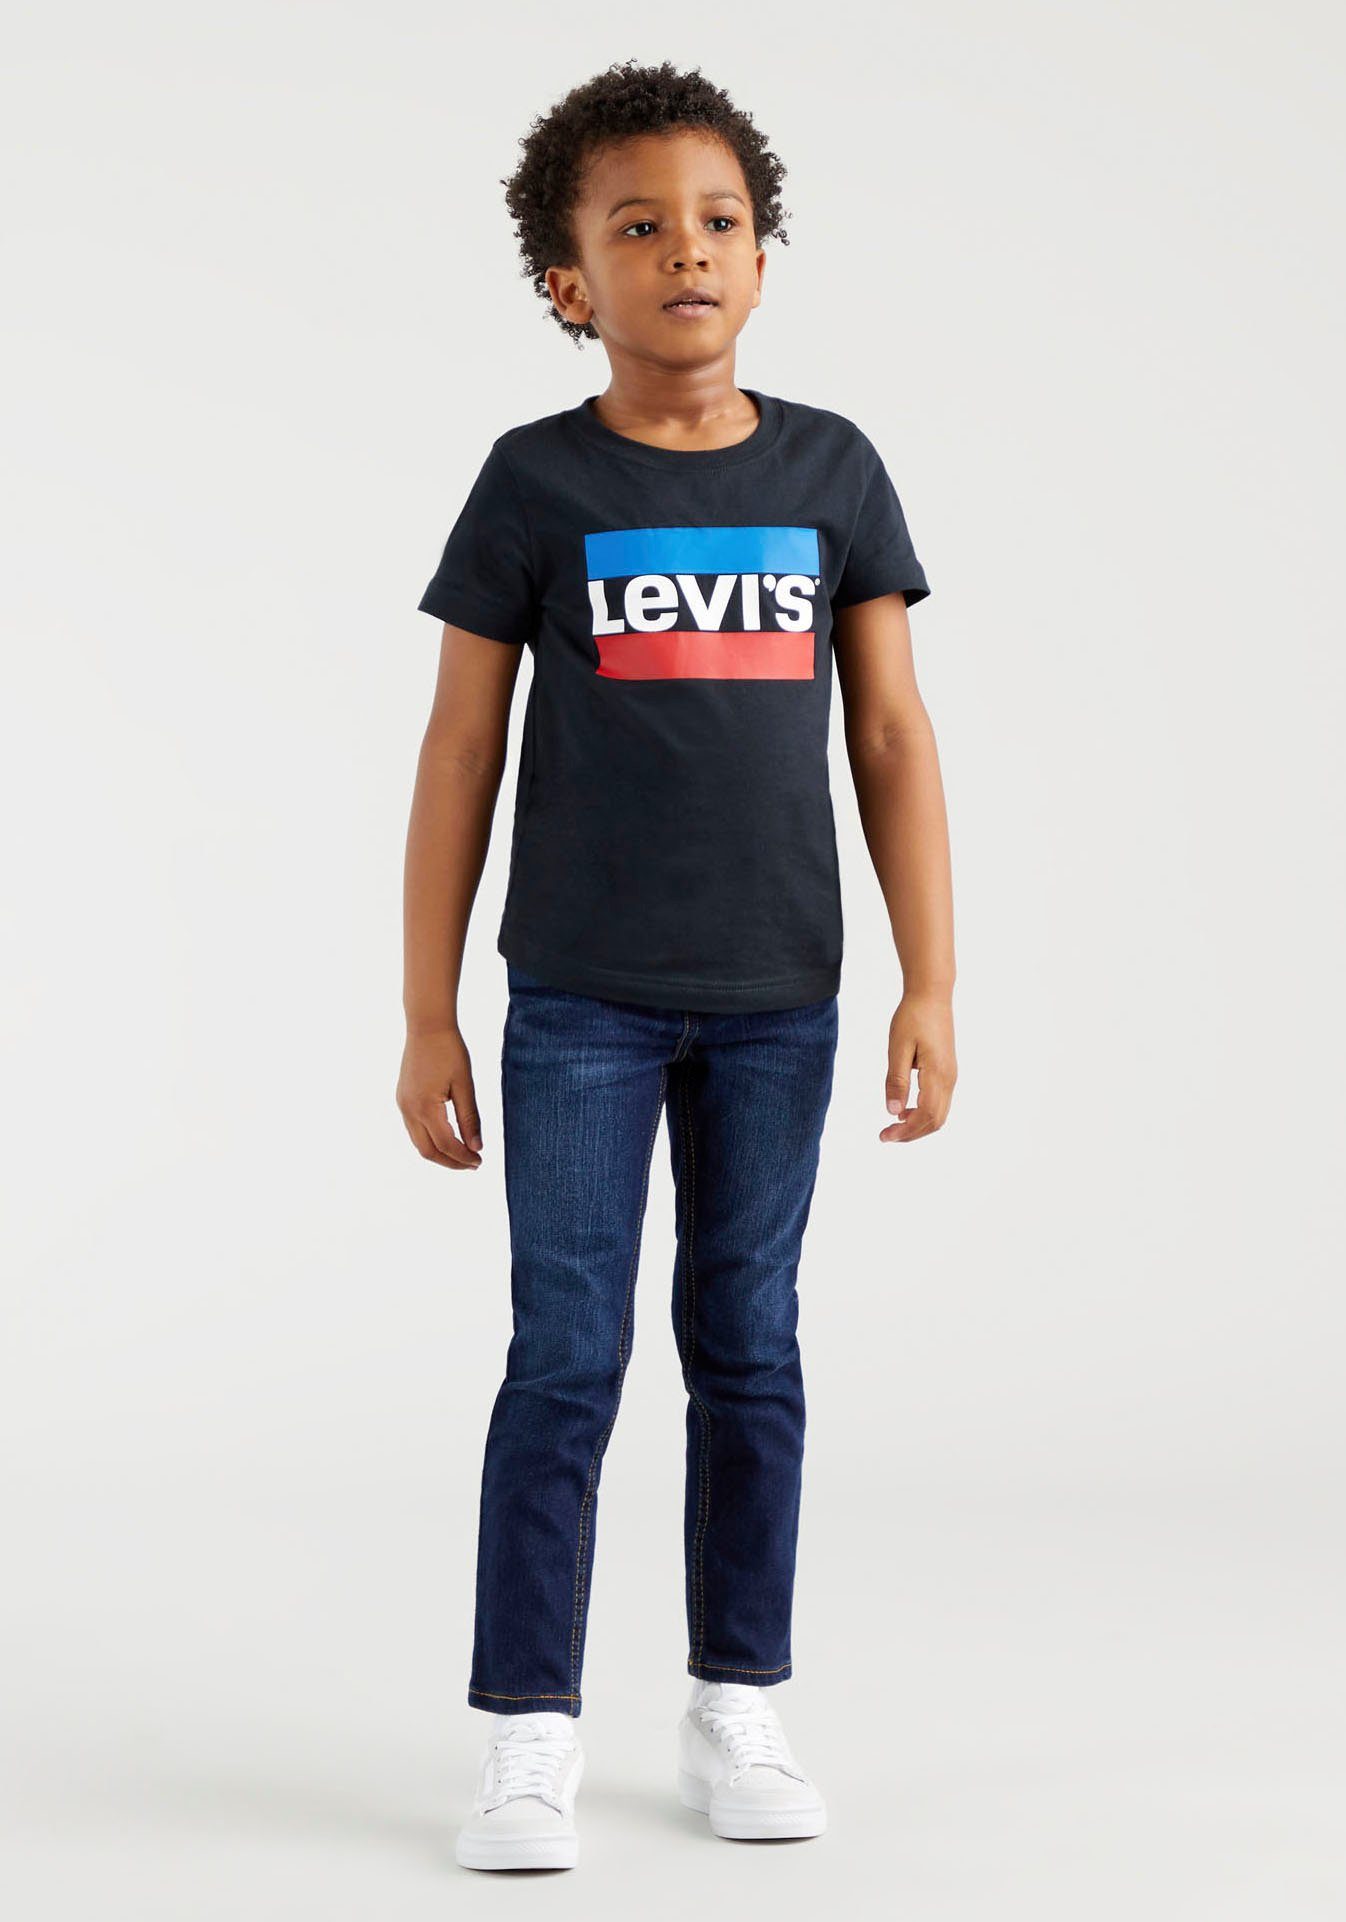 Skinny-fit-Jeans Levi's® SKINNY 510 used Kids BOYS dark-blue FIT for JEANS